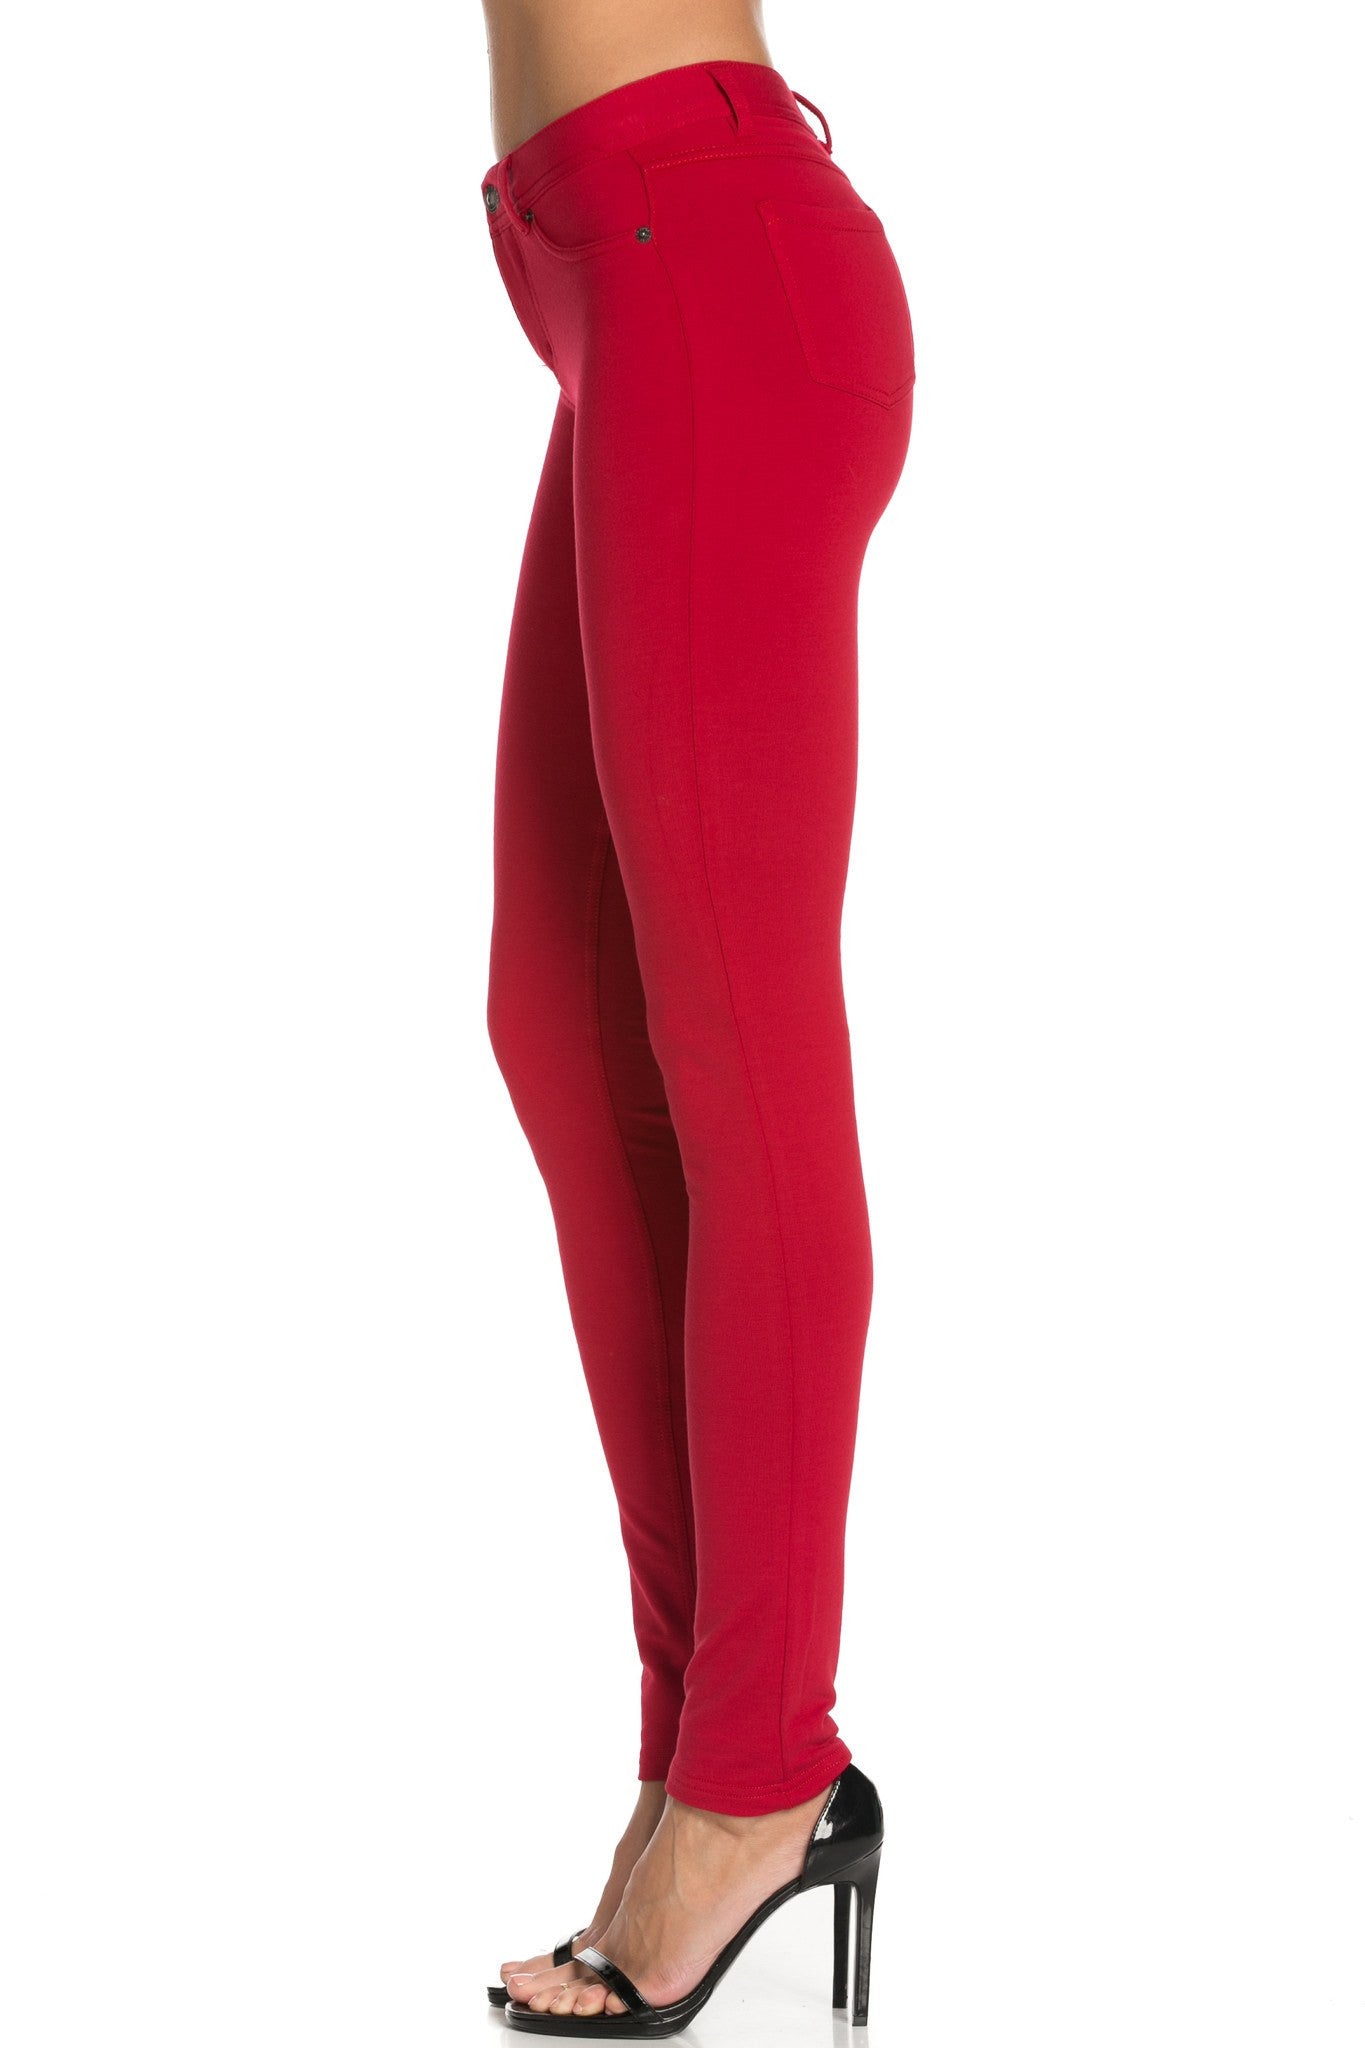 Stretch Skinny Knit Jegging Pants (Red) - Poplooks